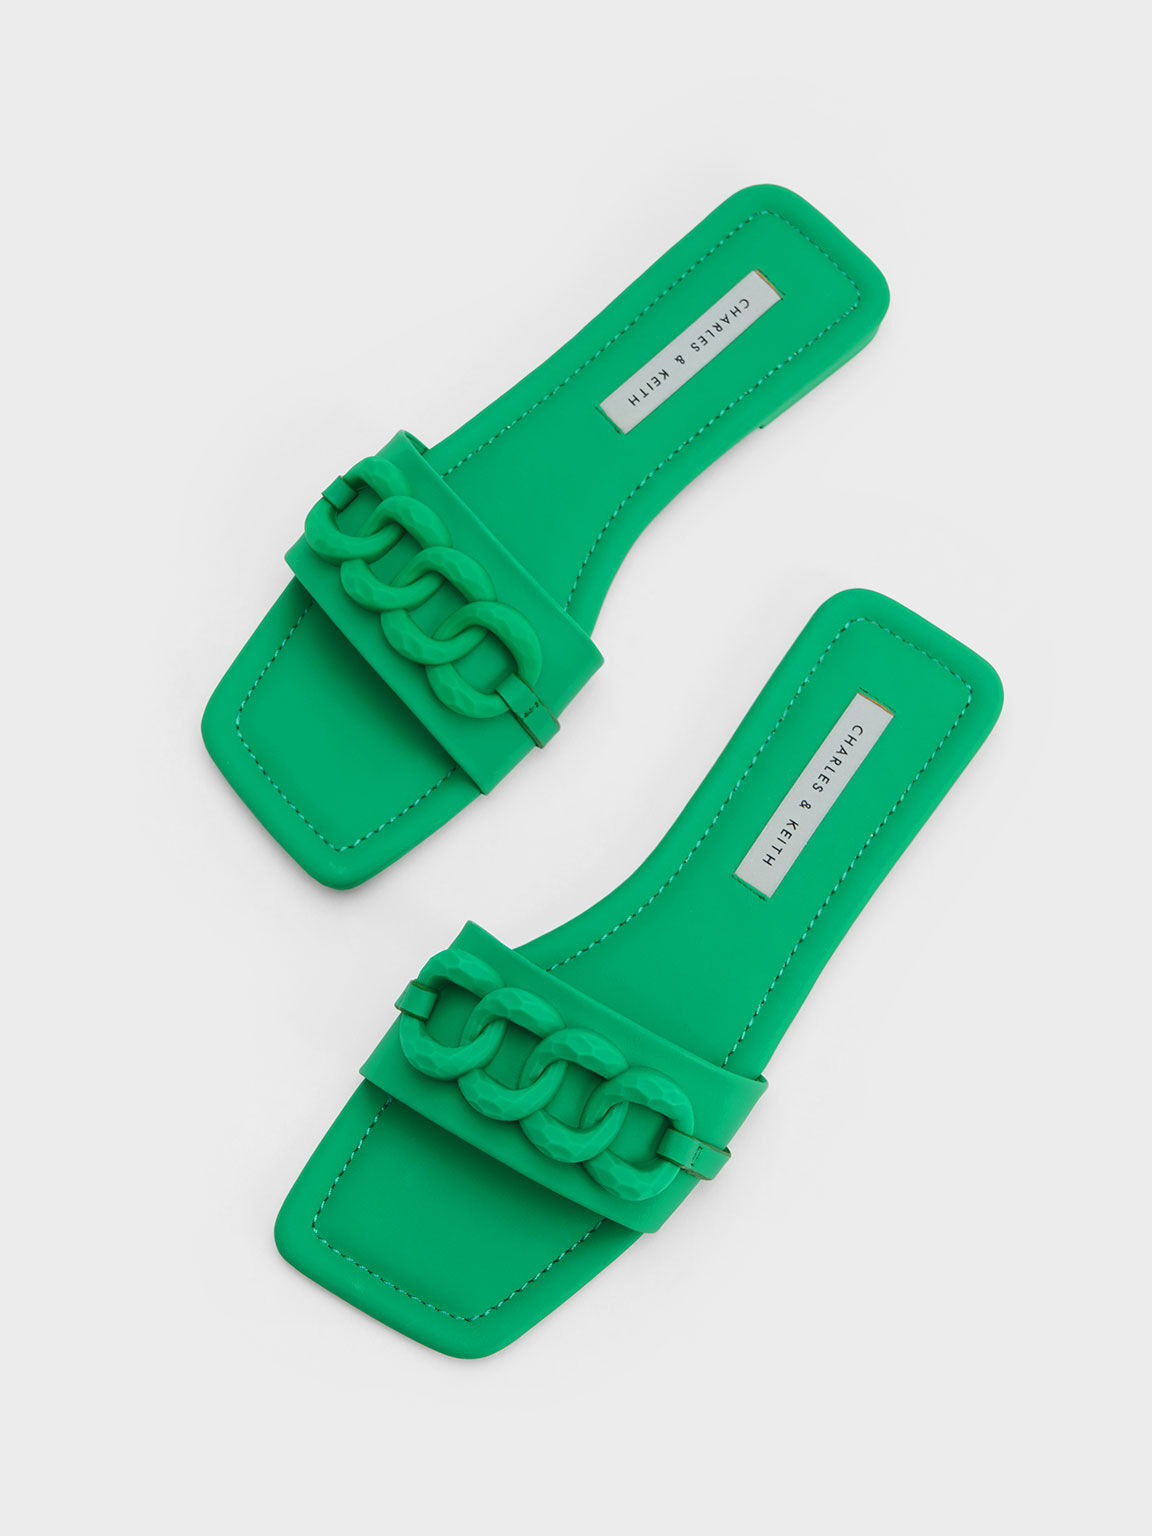 Chunky Chain-Link Slide Sandals, Green, hi-res